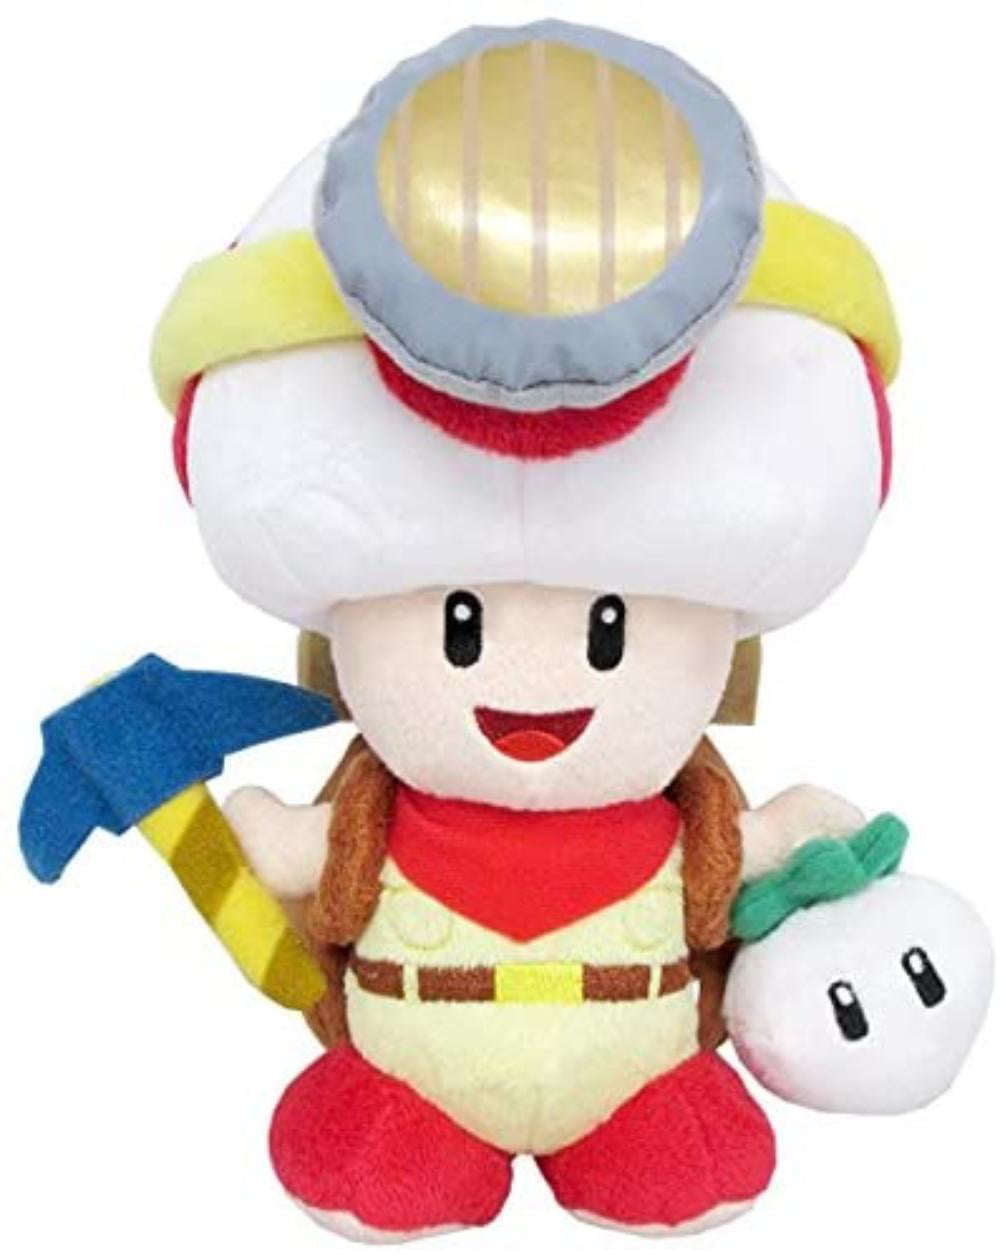 Super Mario Bros Series Captain Toad Bowser Jr Koopa Princess Plush Toy Doll New 